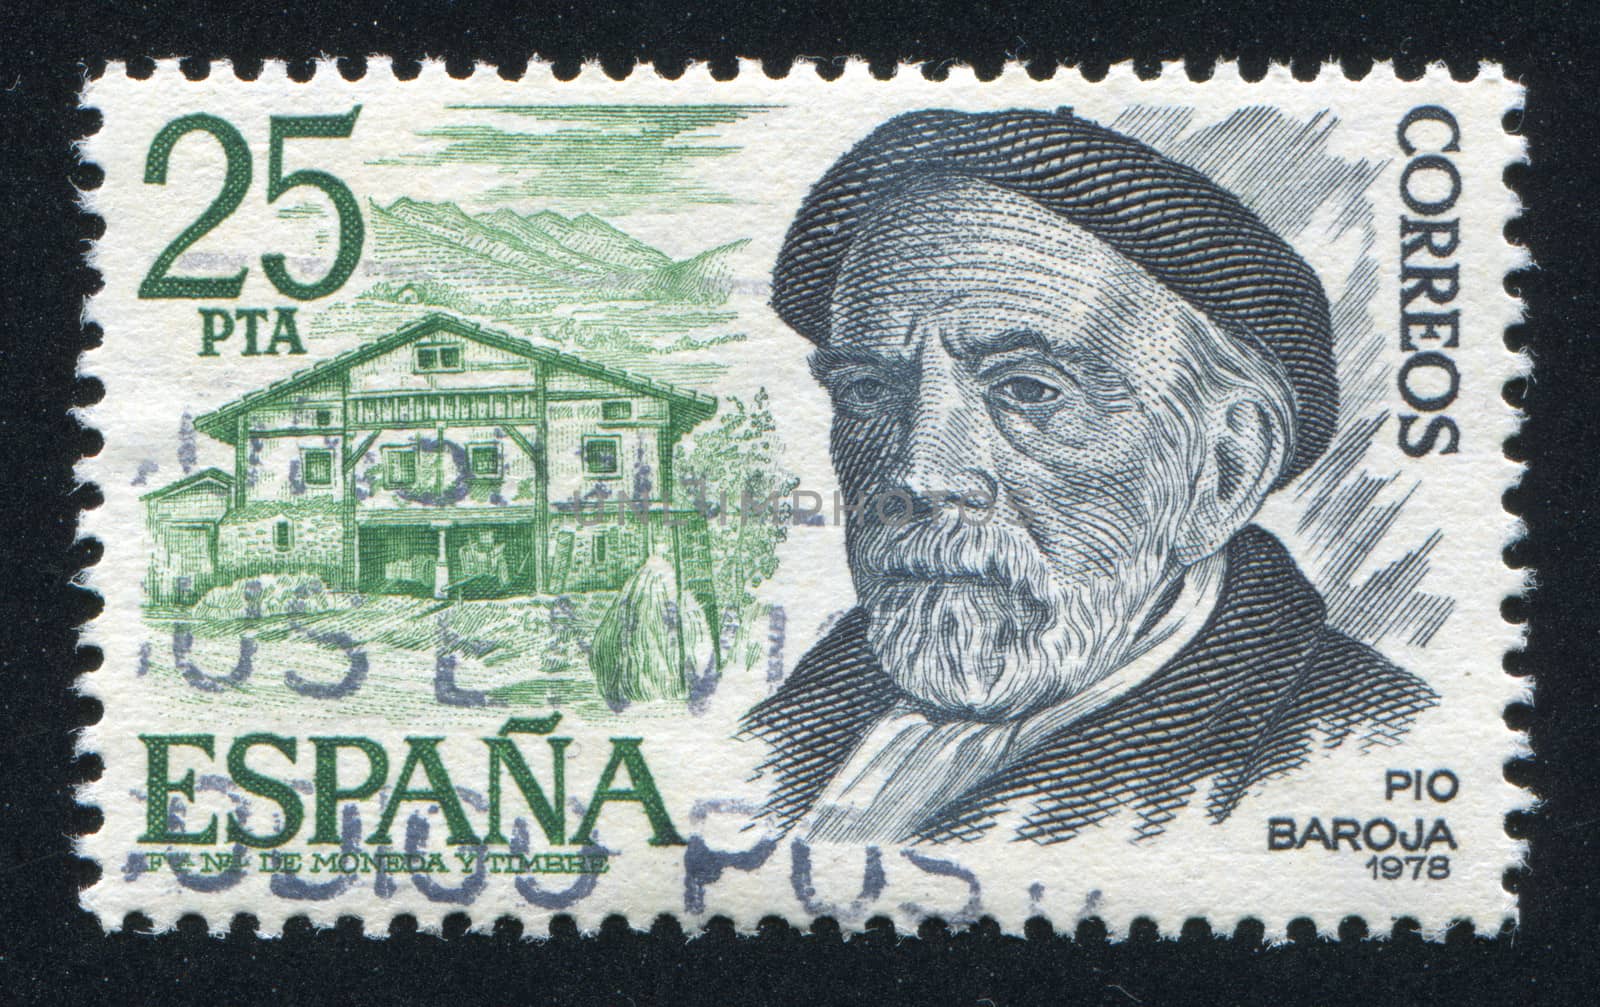 SPAIN - CIRCA 1978: stamp printed by Spain, shows Pio Baroja, circa 1978